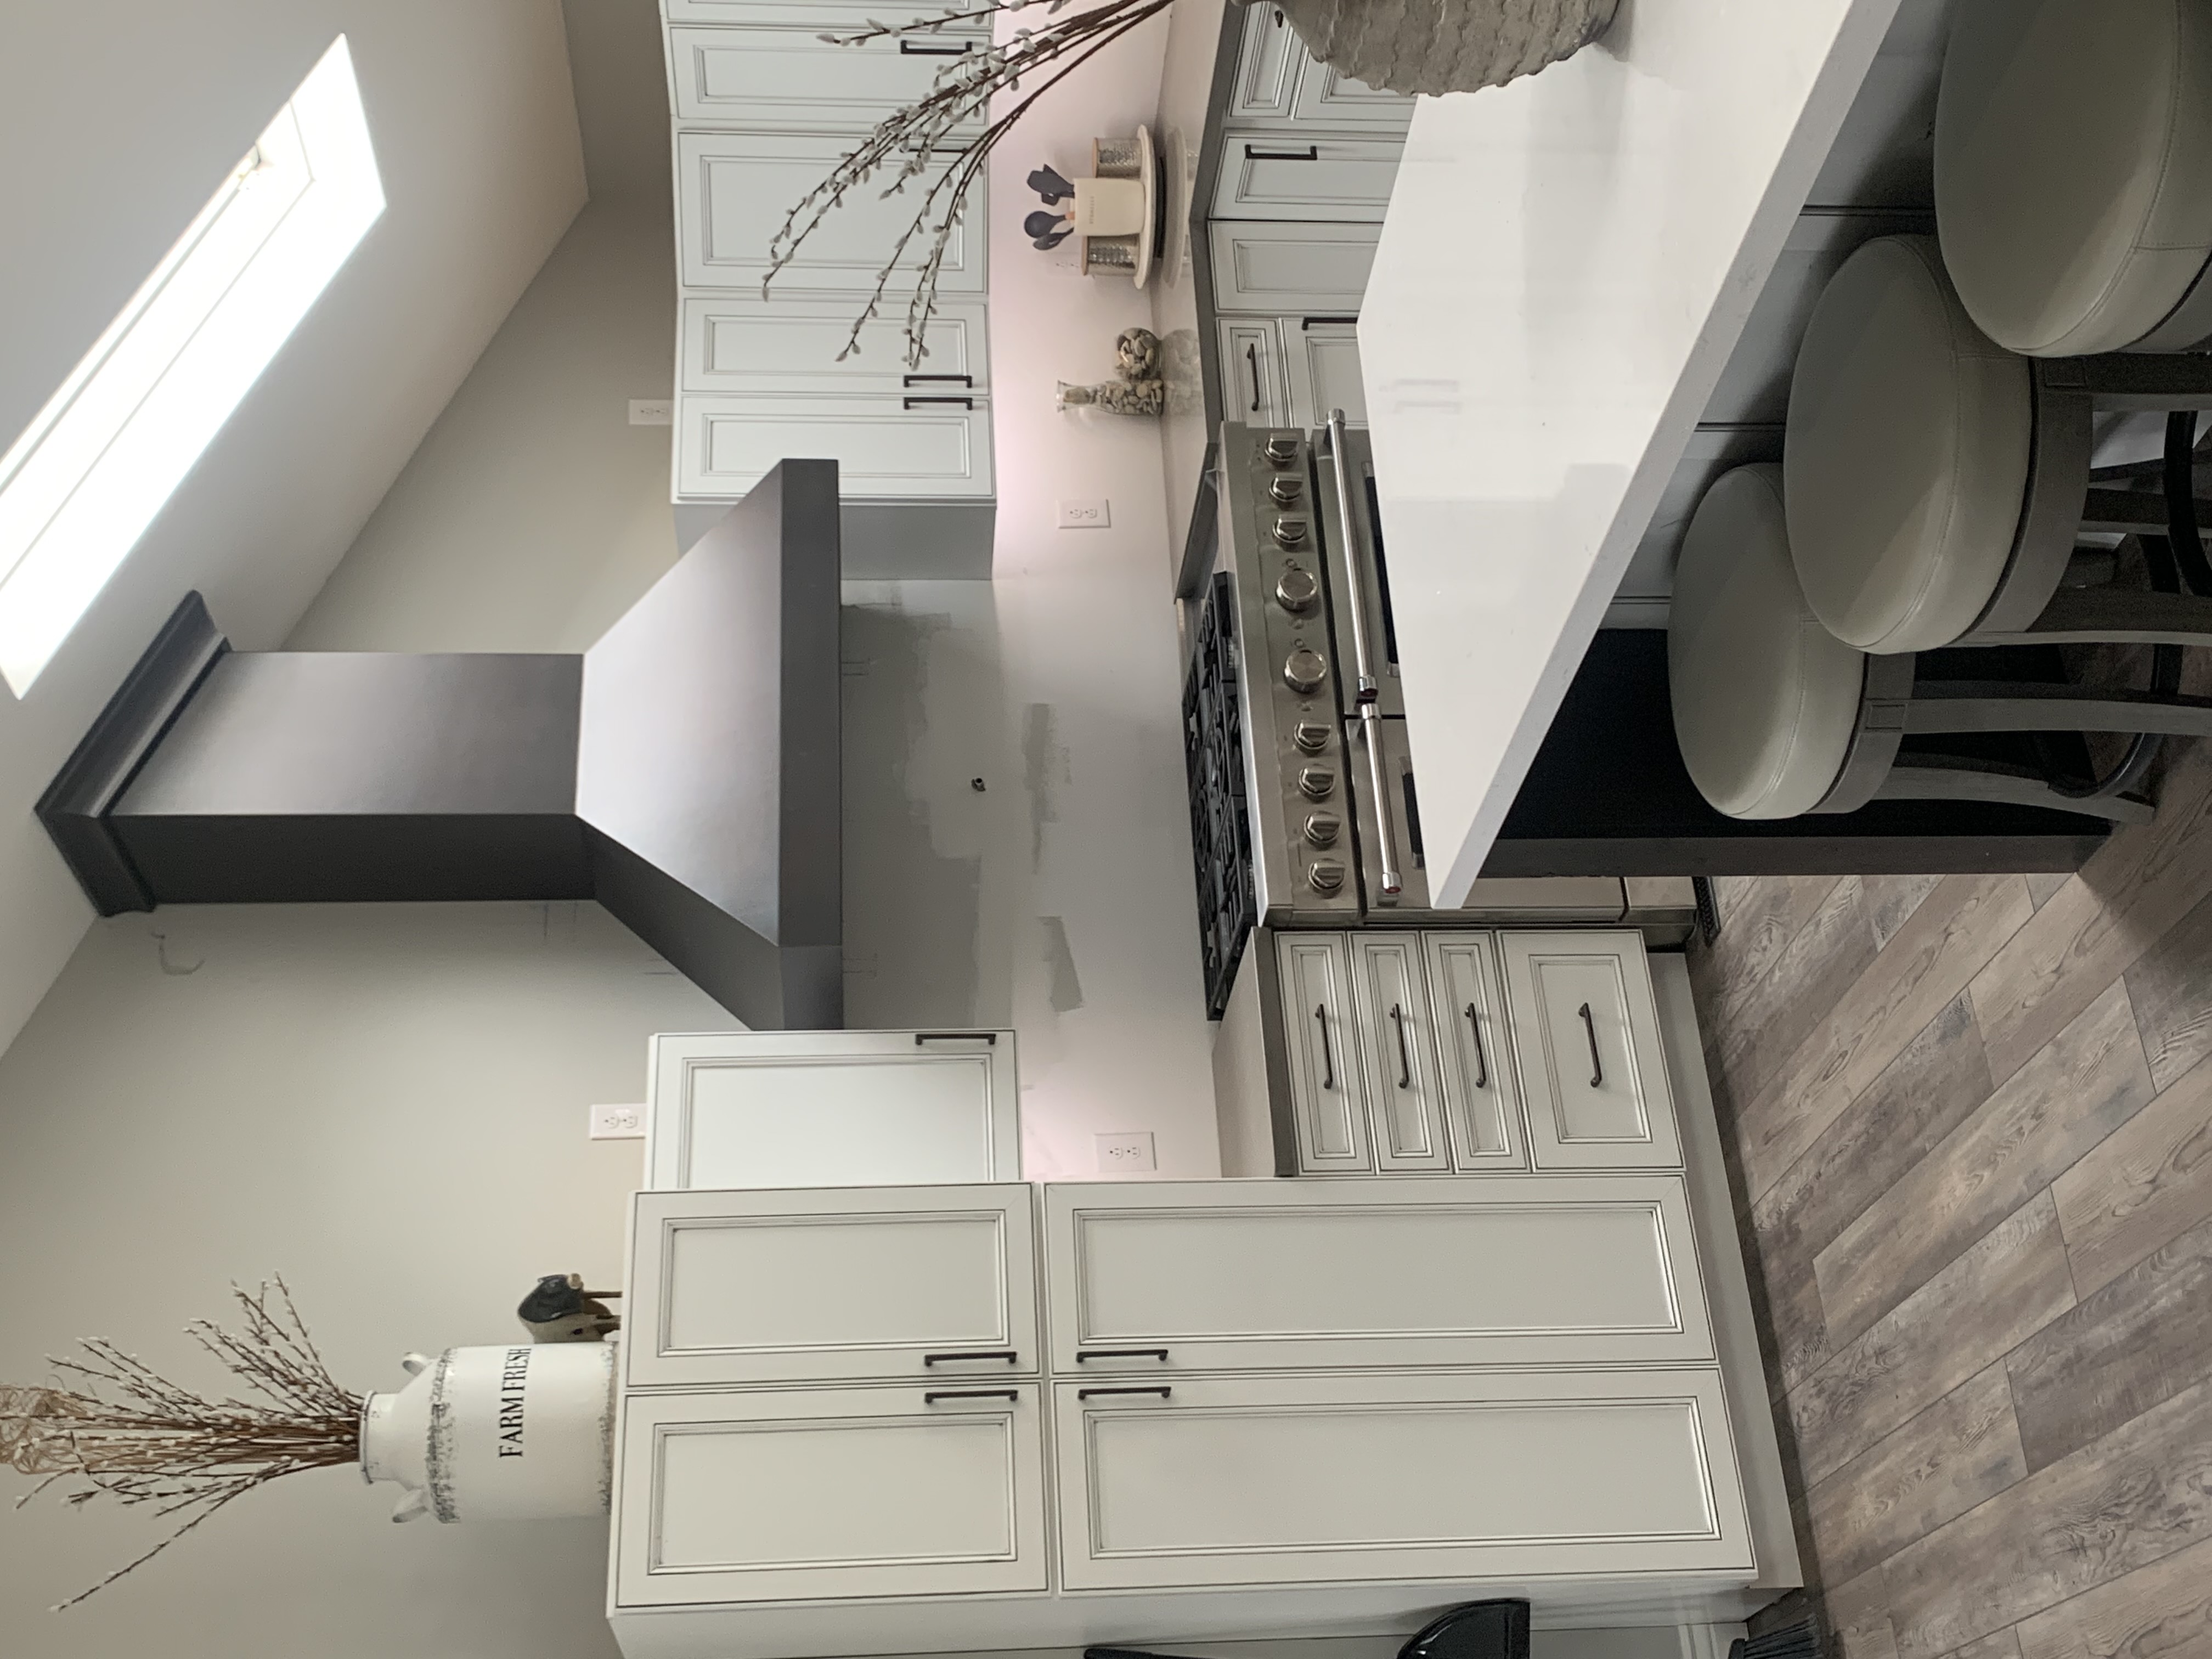 Charming cottage kitchen design idea kitchen table ideas, consider using white kitchen cabinets marble kitchen countertops stunning marble backsplash